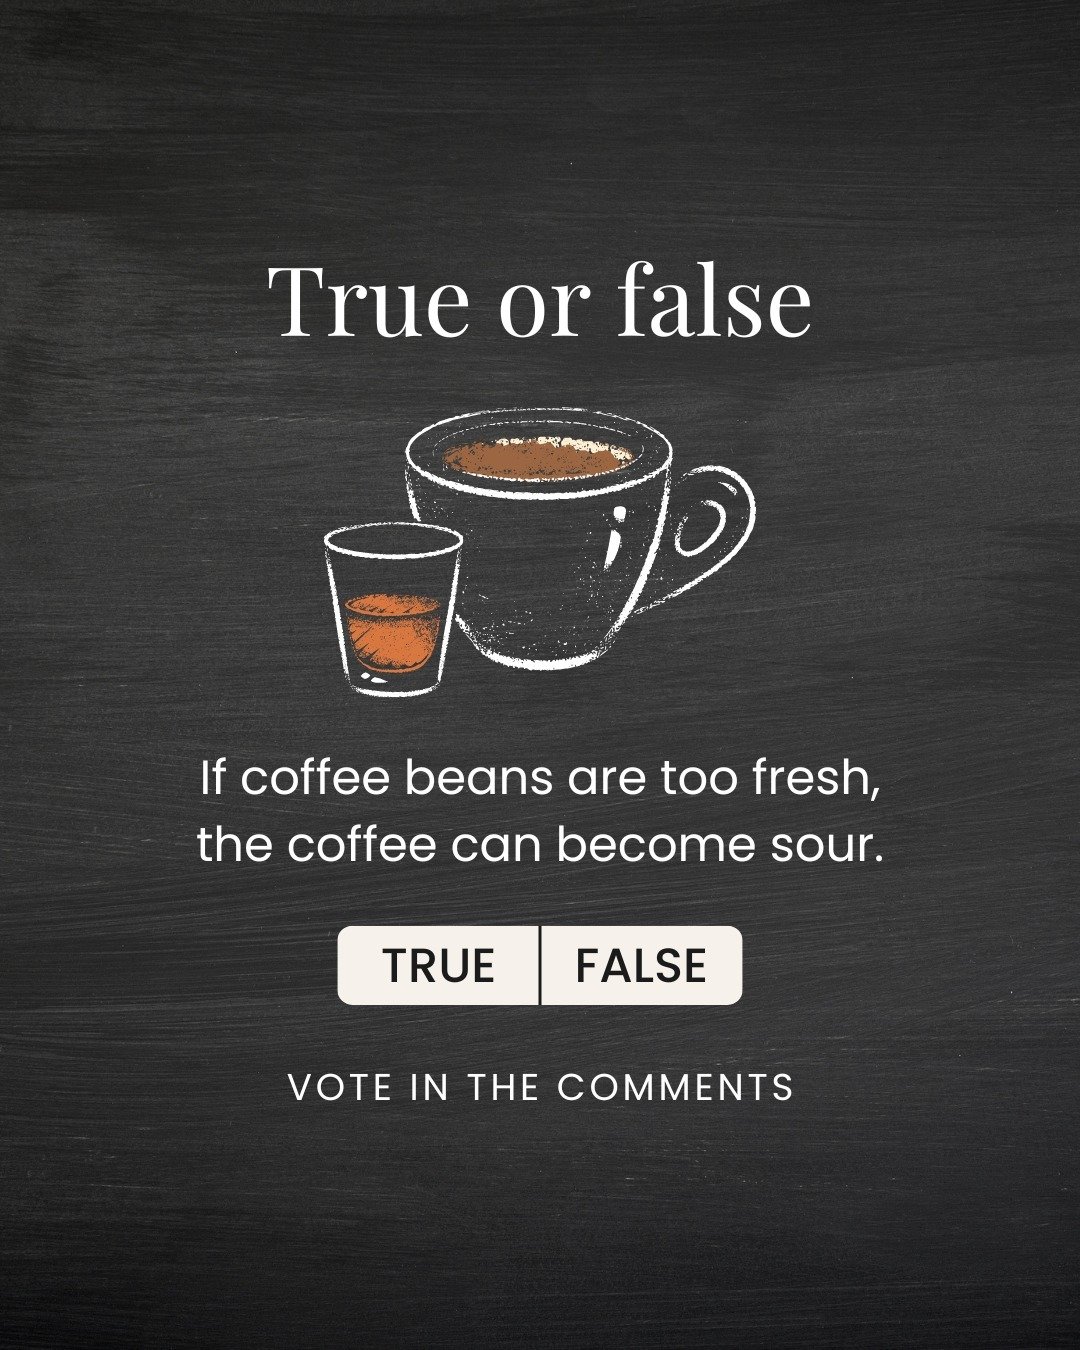 Is this true or false? Share what you think below ⤵️

.
.
.
#coffeeblogger #goodcoffee #coffeeshot #coffeeprops #coffeeoclock #coffeeholics #instacoffeelovers #coffeecoffeecoffee #lattegram #caffeineaddict #freshcoffee #coffeeofinstagram #coffeepeopl